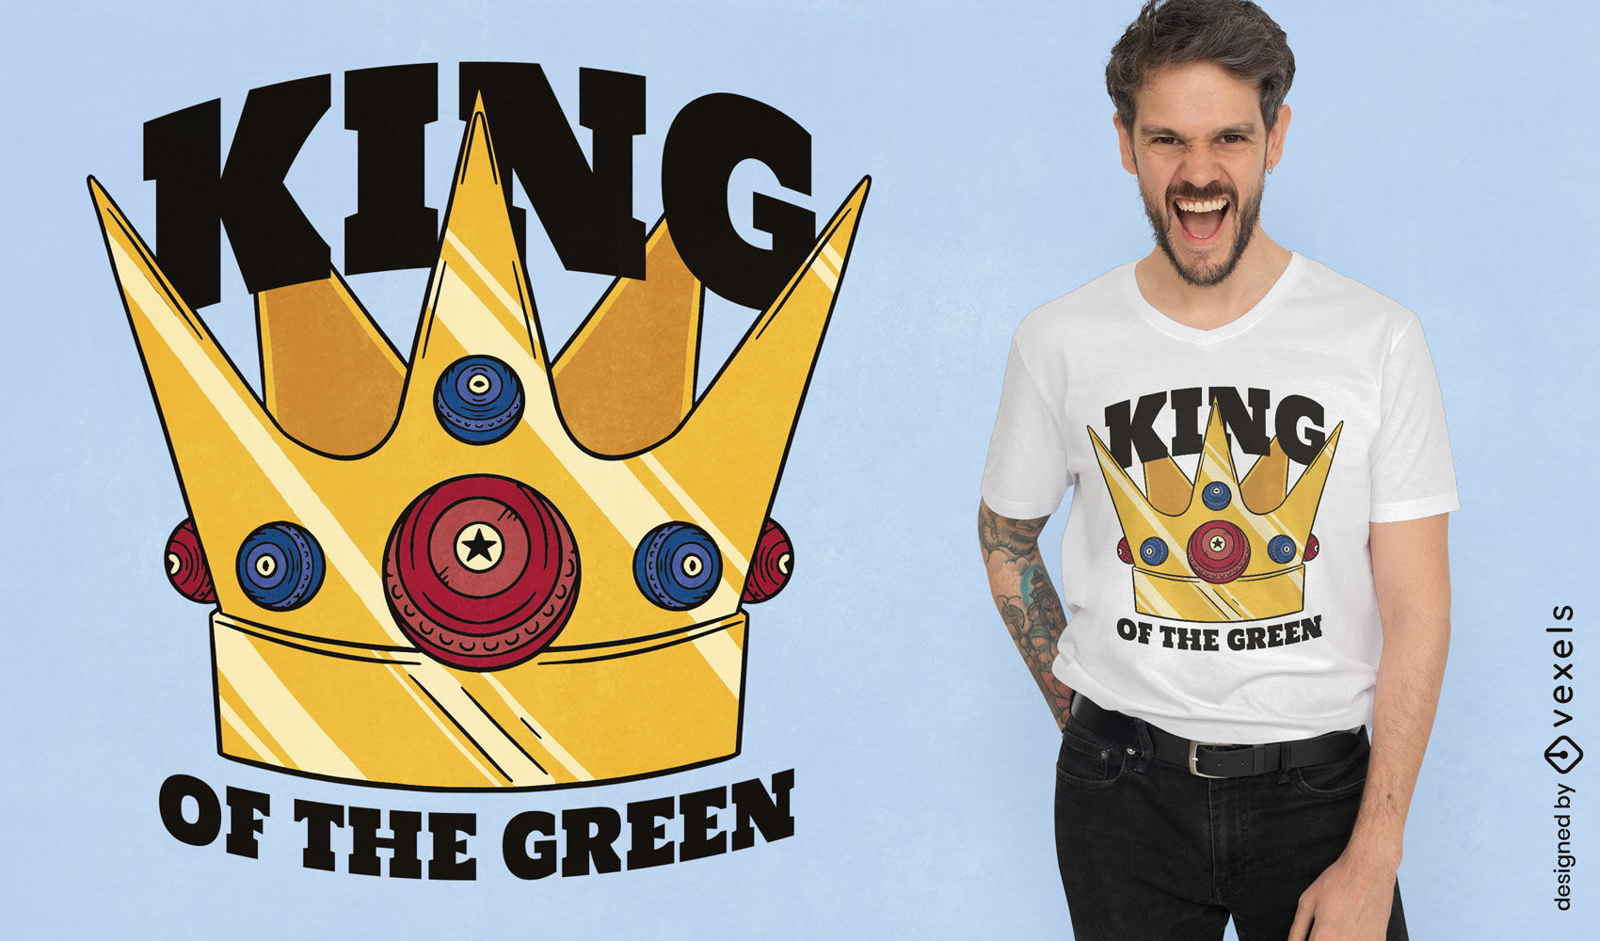 Dise?o de camiseta rey de la corona verde.